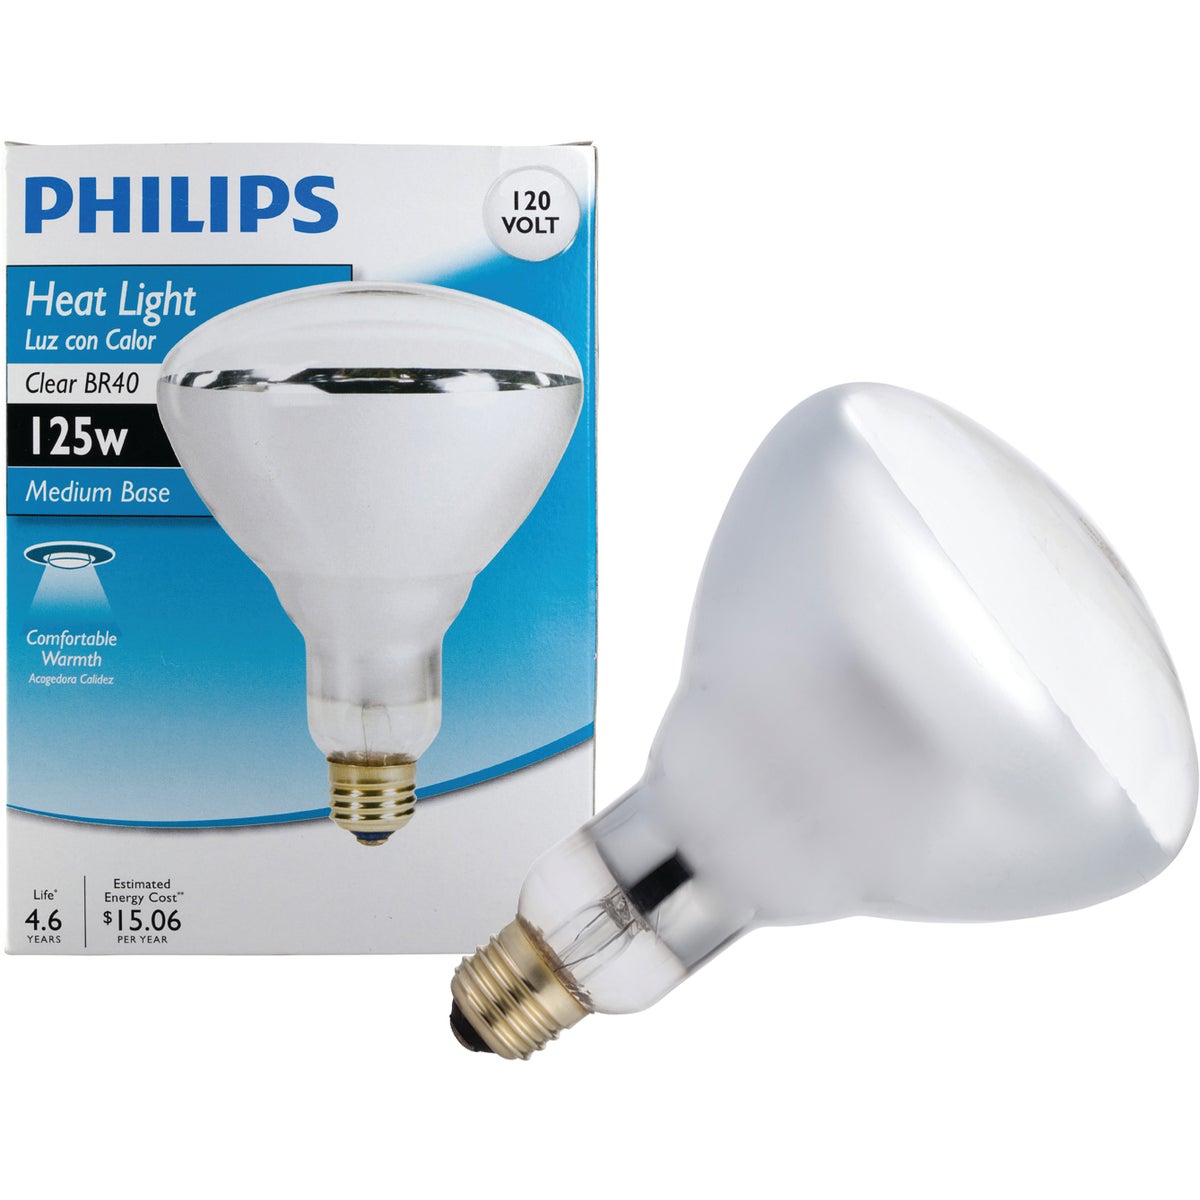 Philips 125W Clear Medium BR40 Incandescent Heat Light Bulb